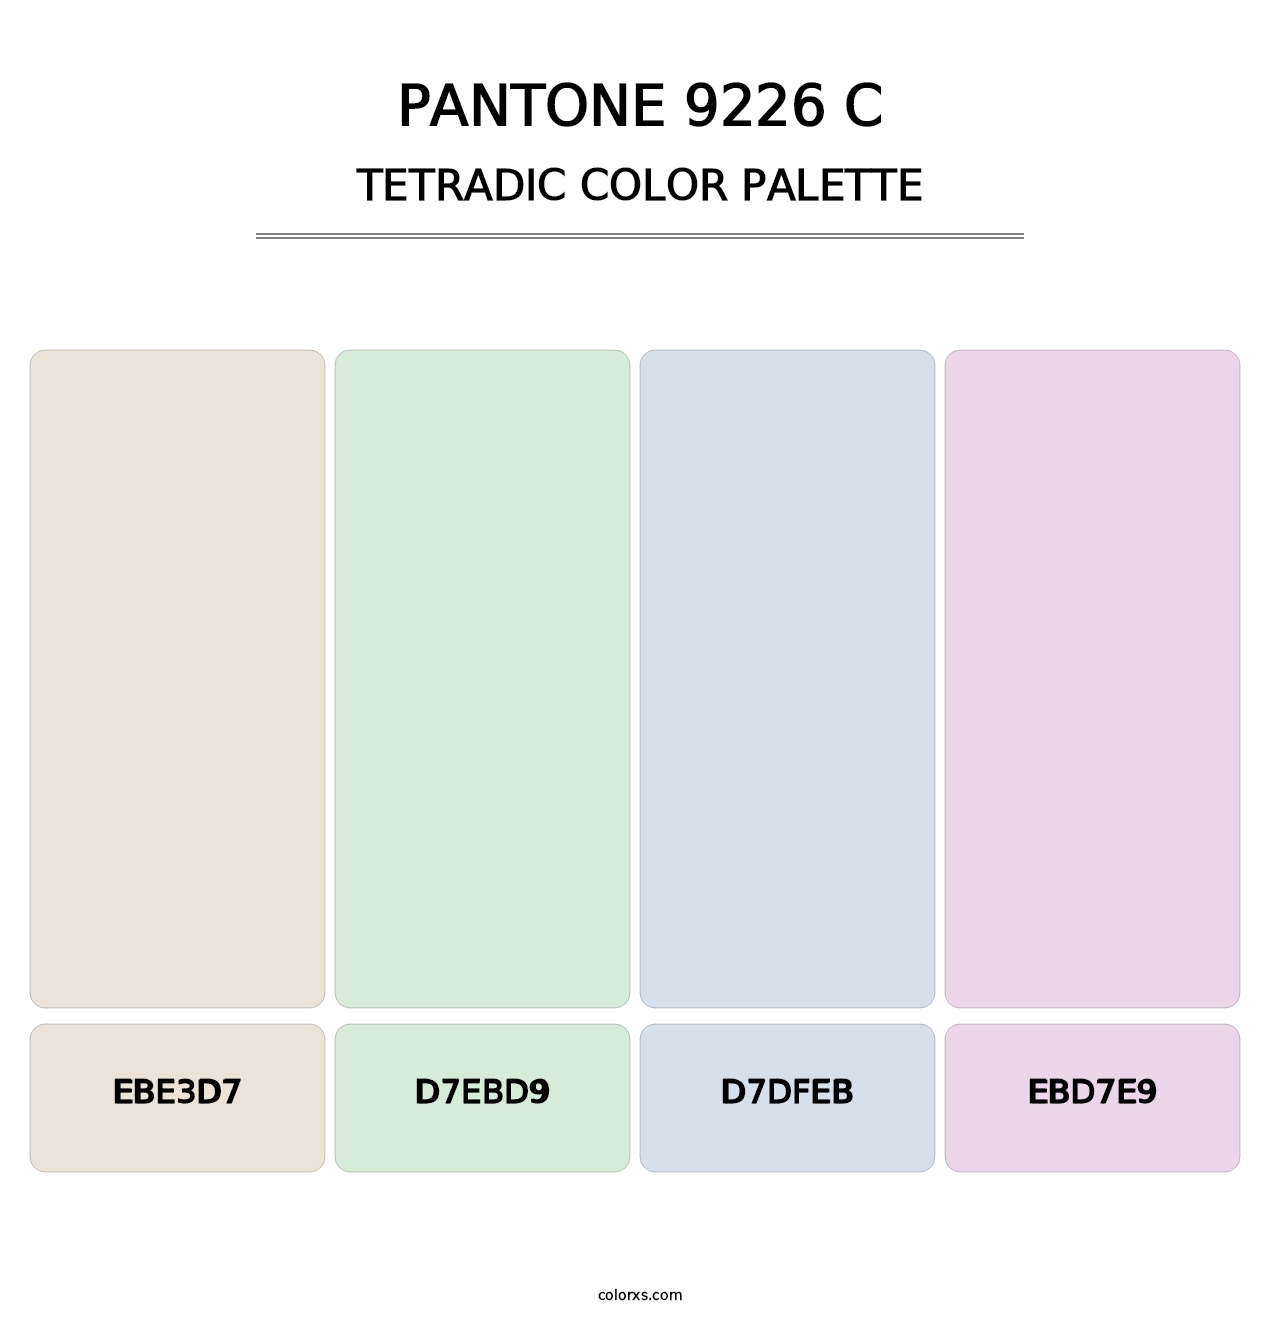 PANTONE 9226 C - Tetradic Color Palette